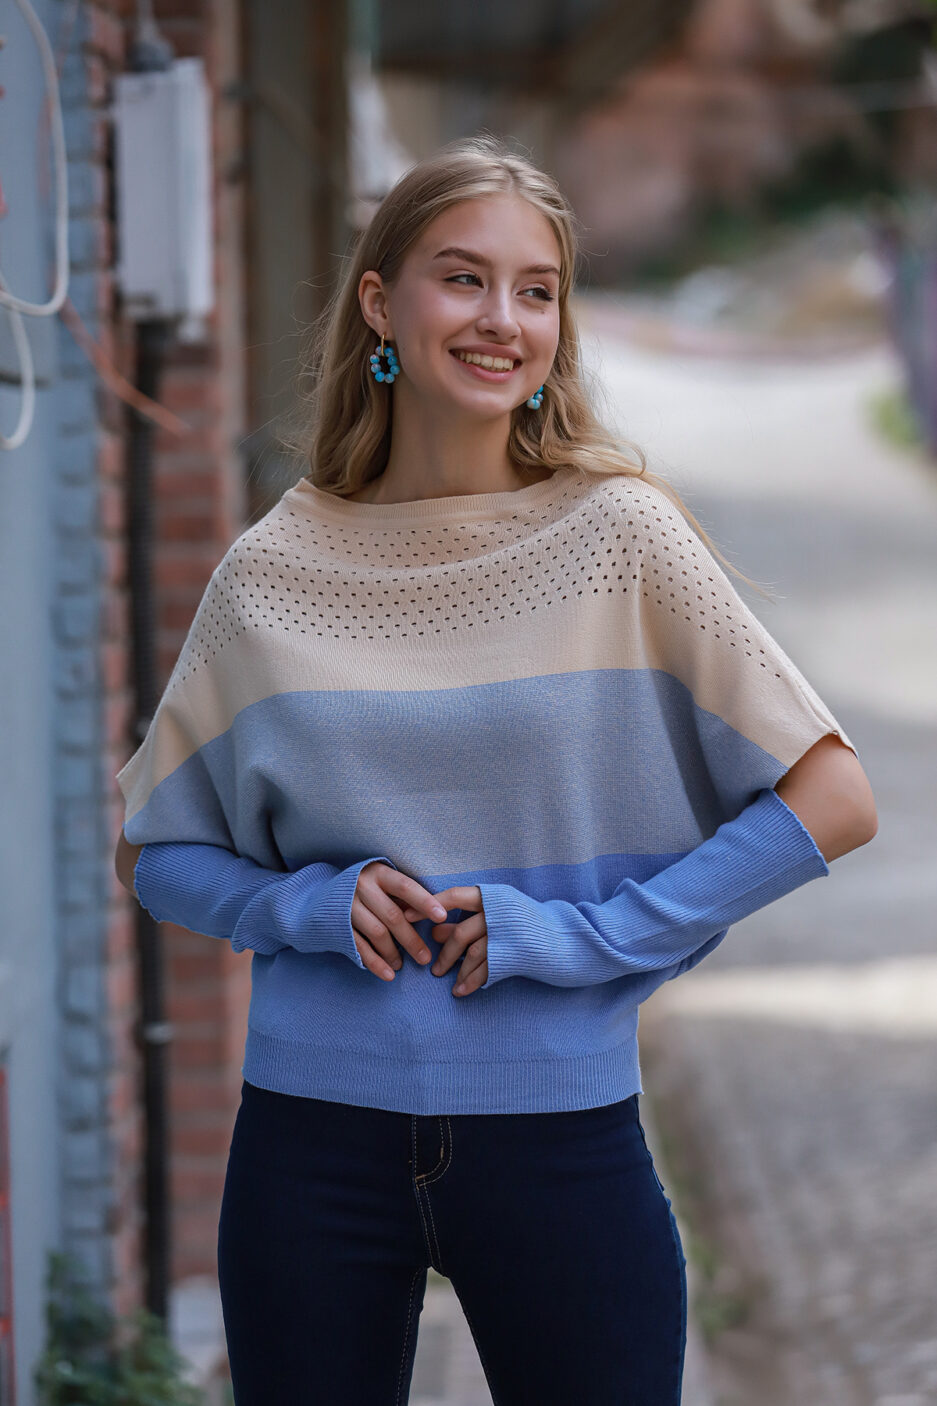 horizontal striped sweater women's